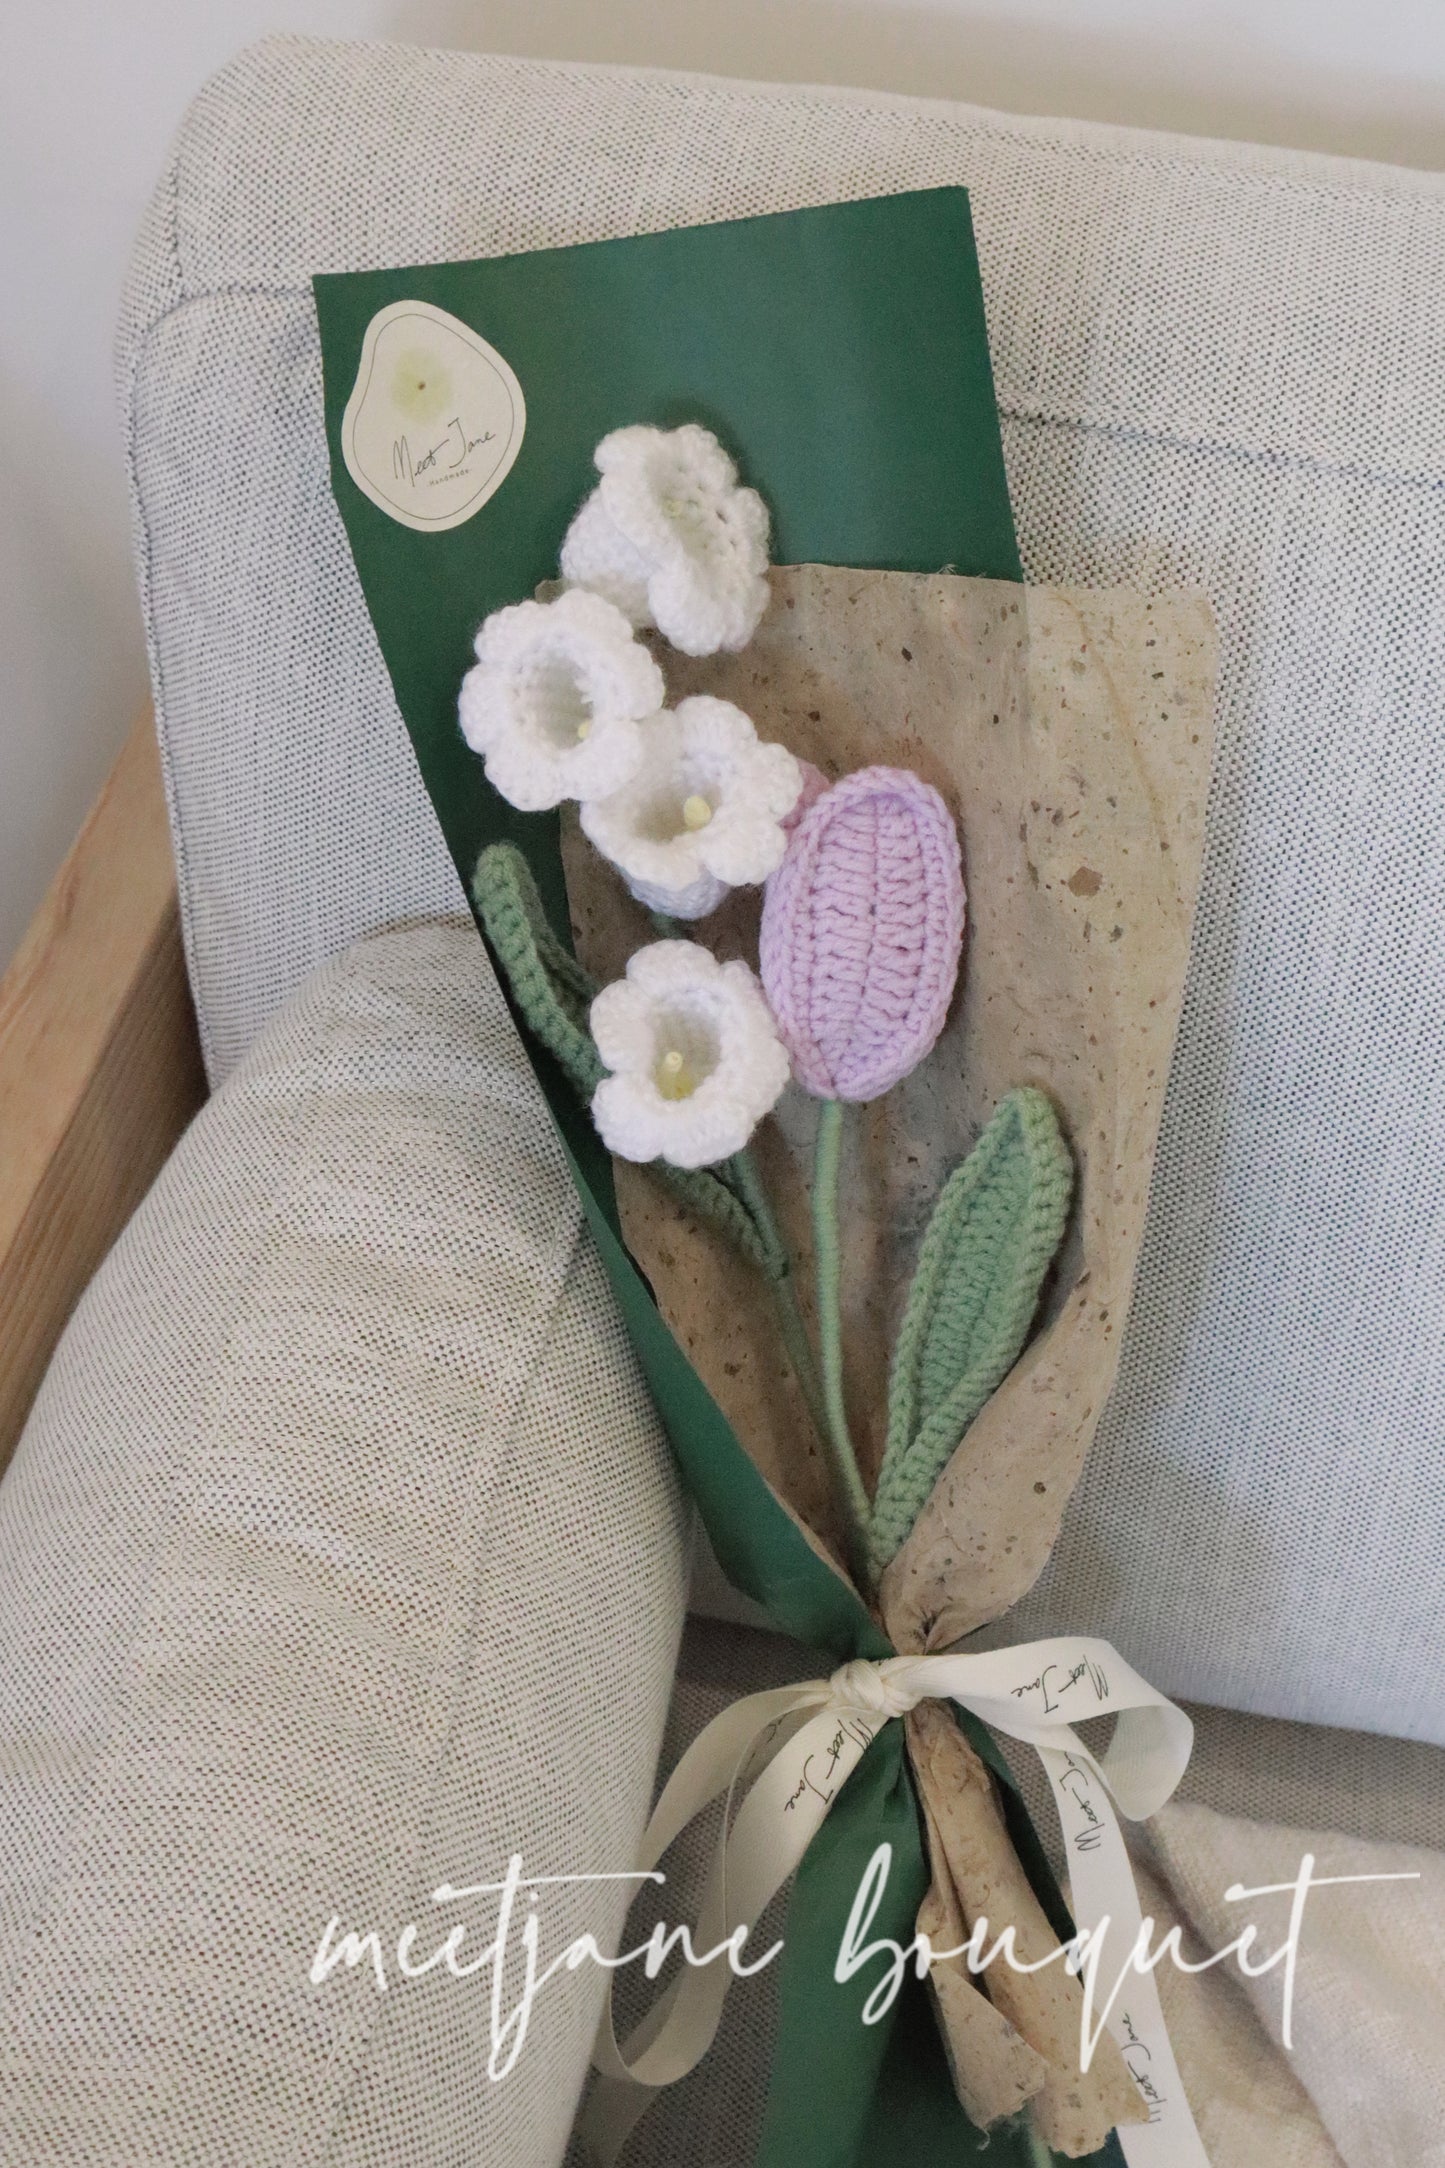 Meetjane Bouquet|Melbourne handmade |Lily of the valley + tulip